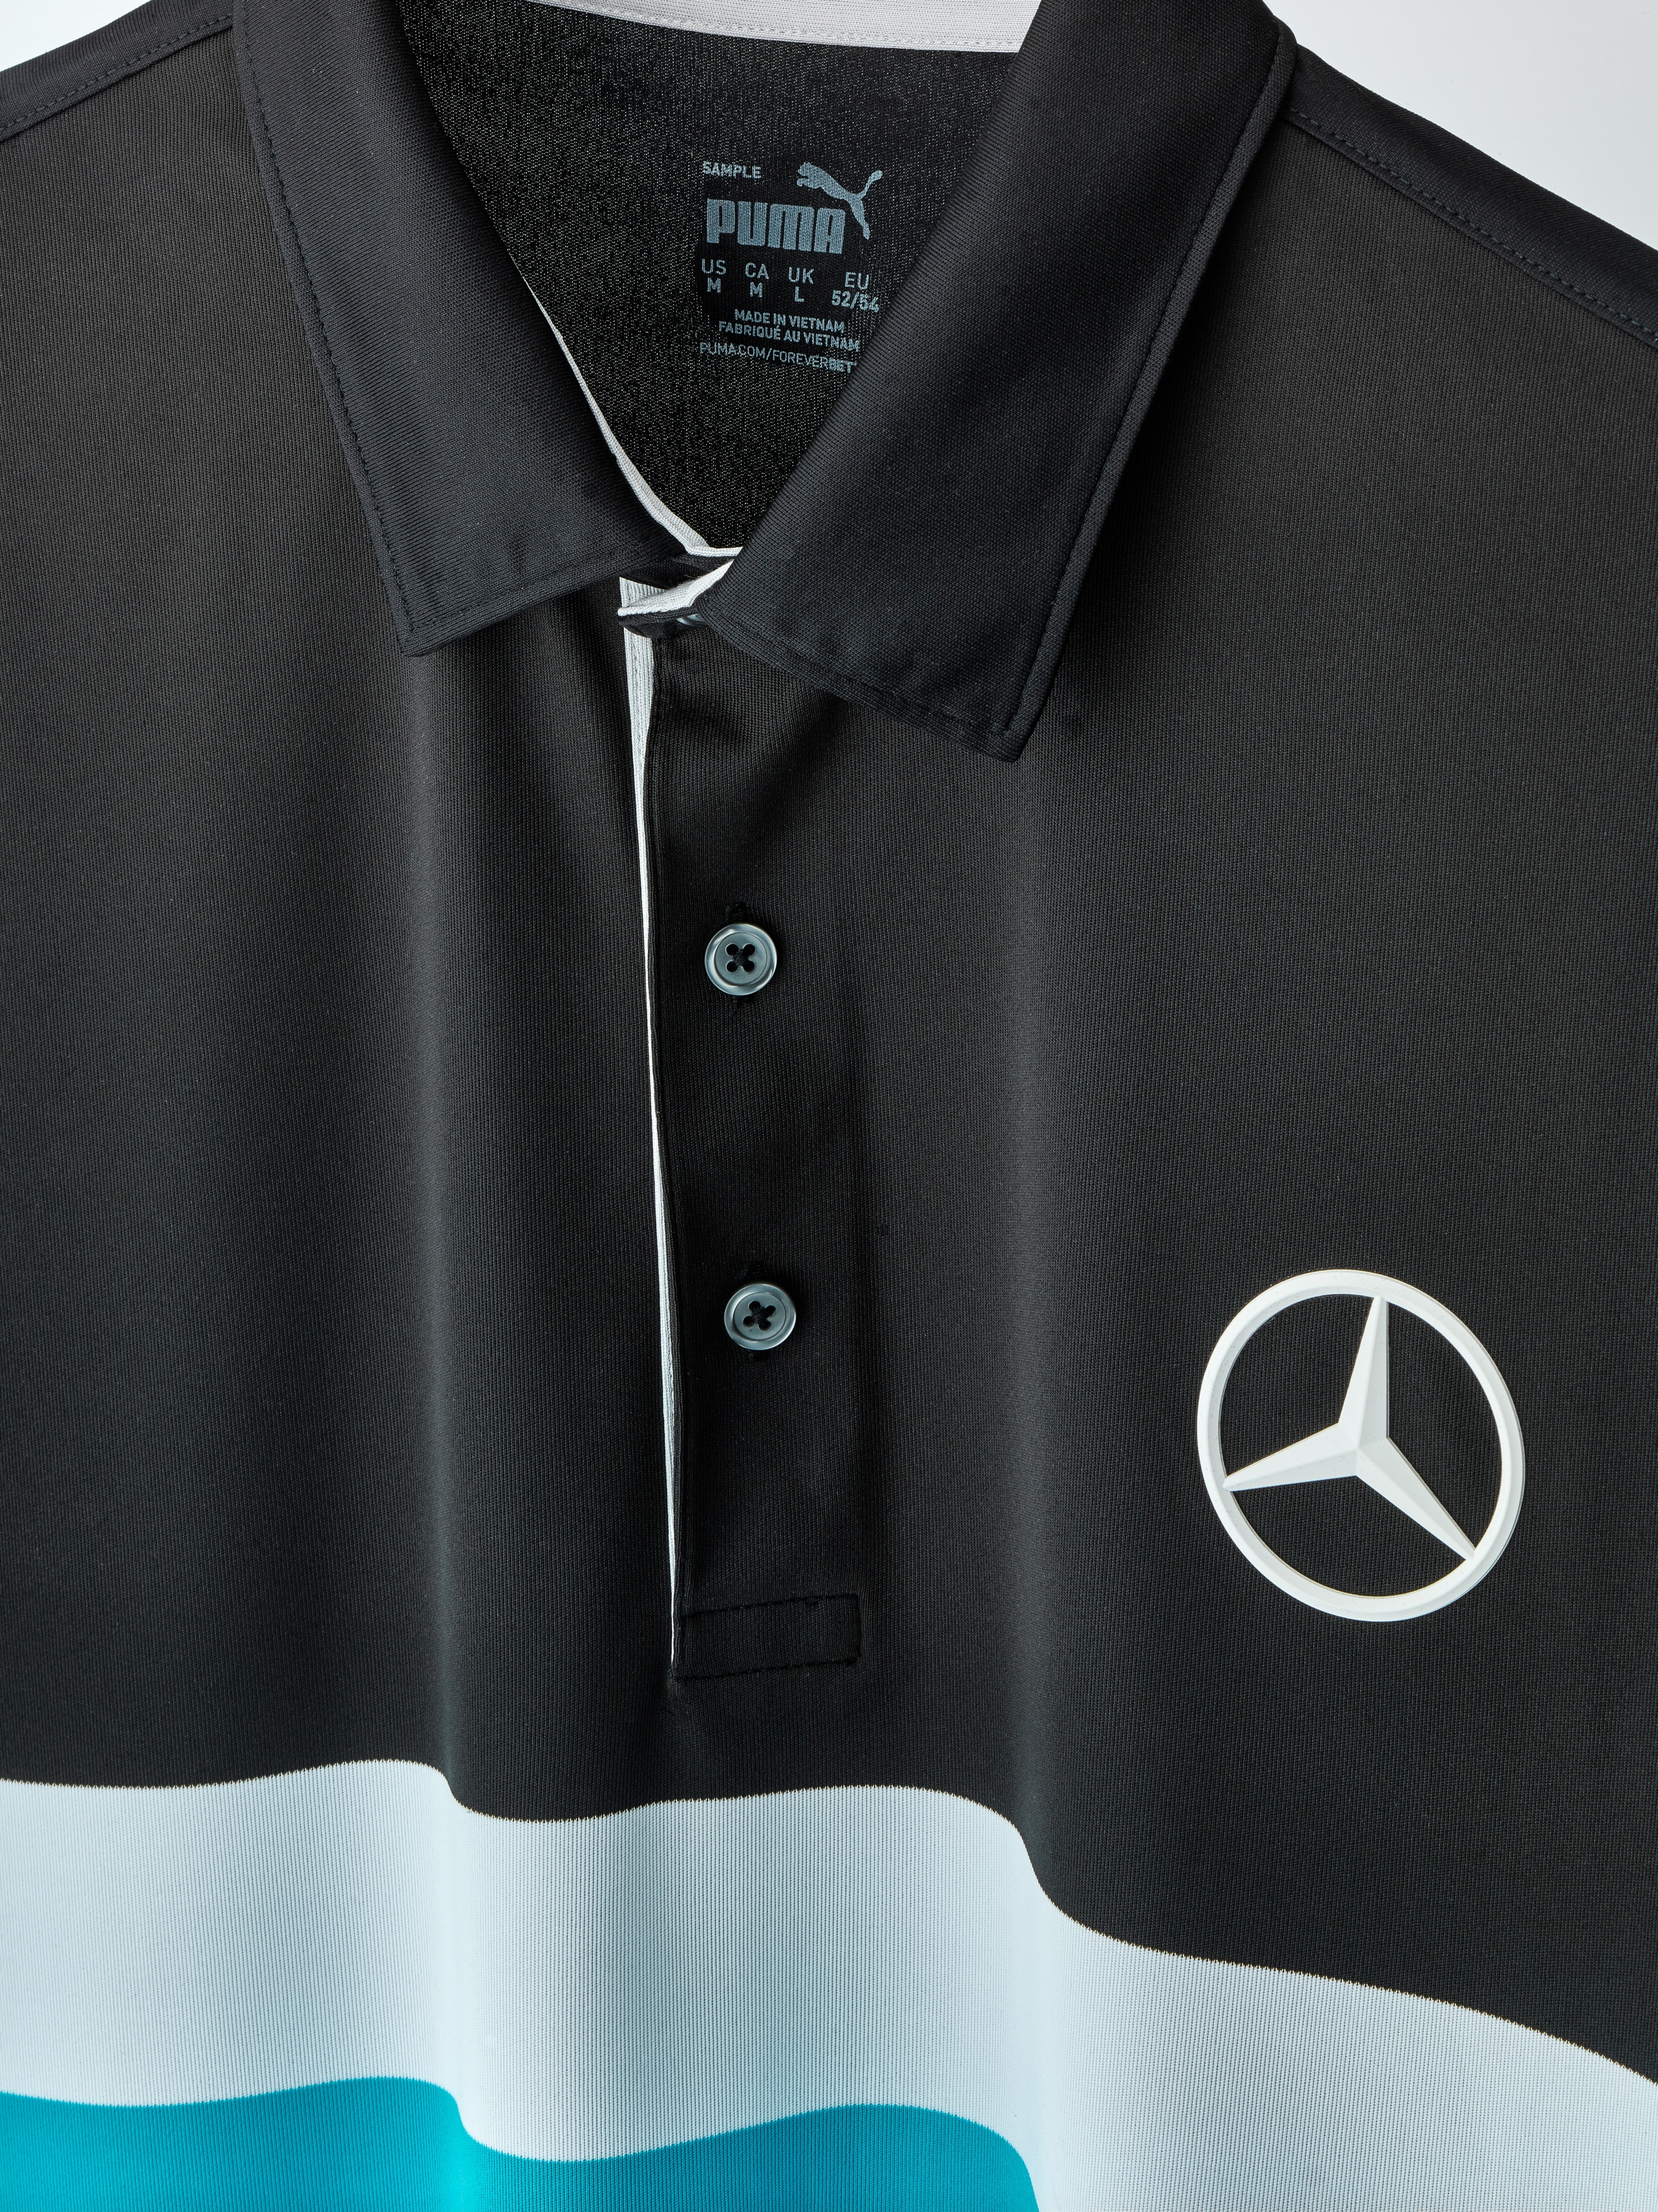 Golf-Poloshirt Herren, Pure Colorblock - black / Aqua Blue / white, M